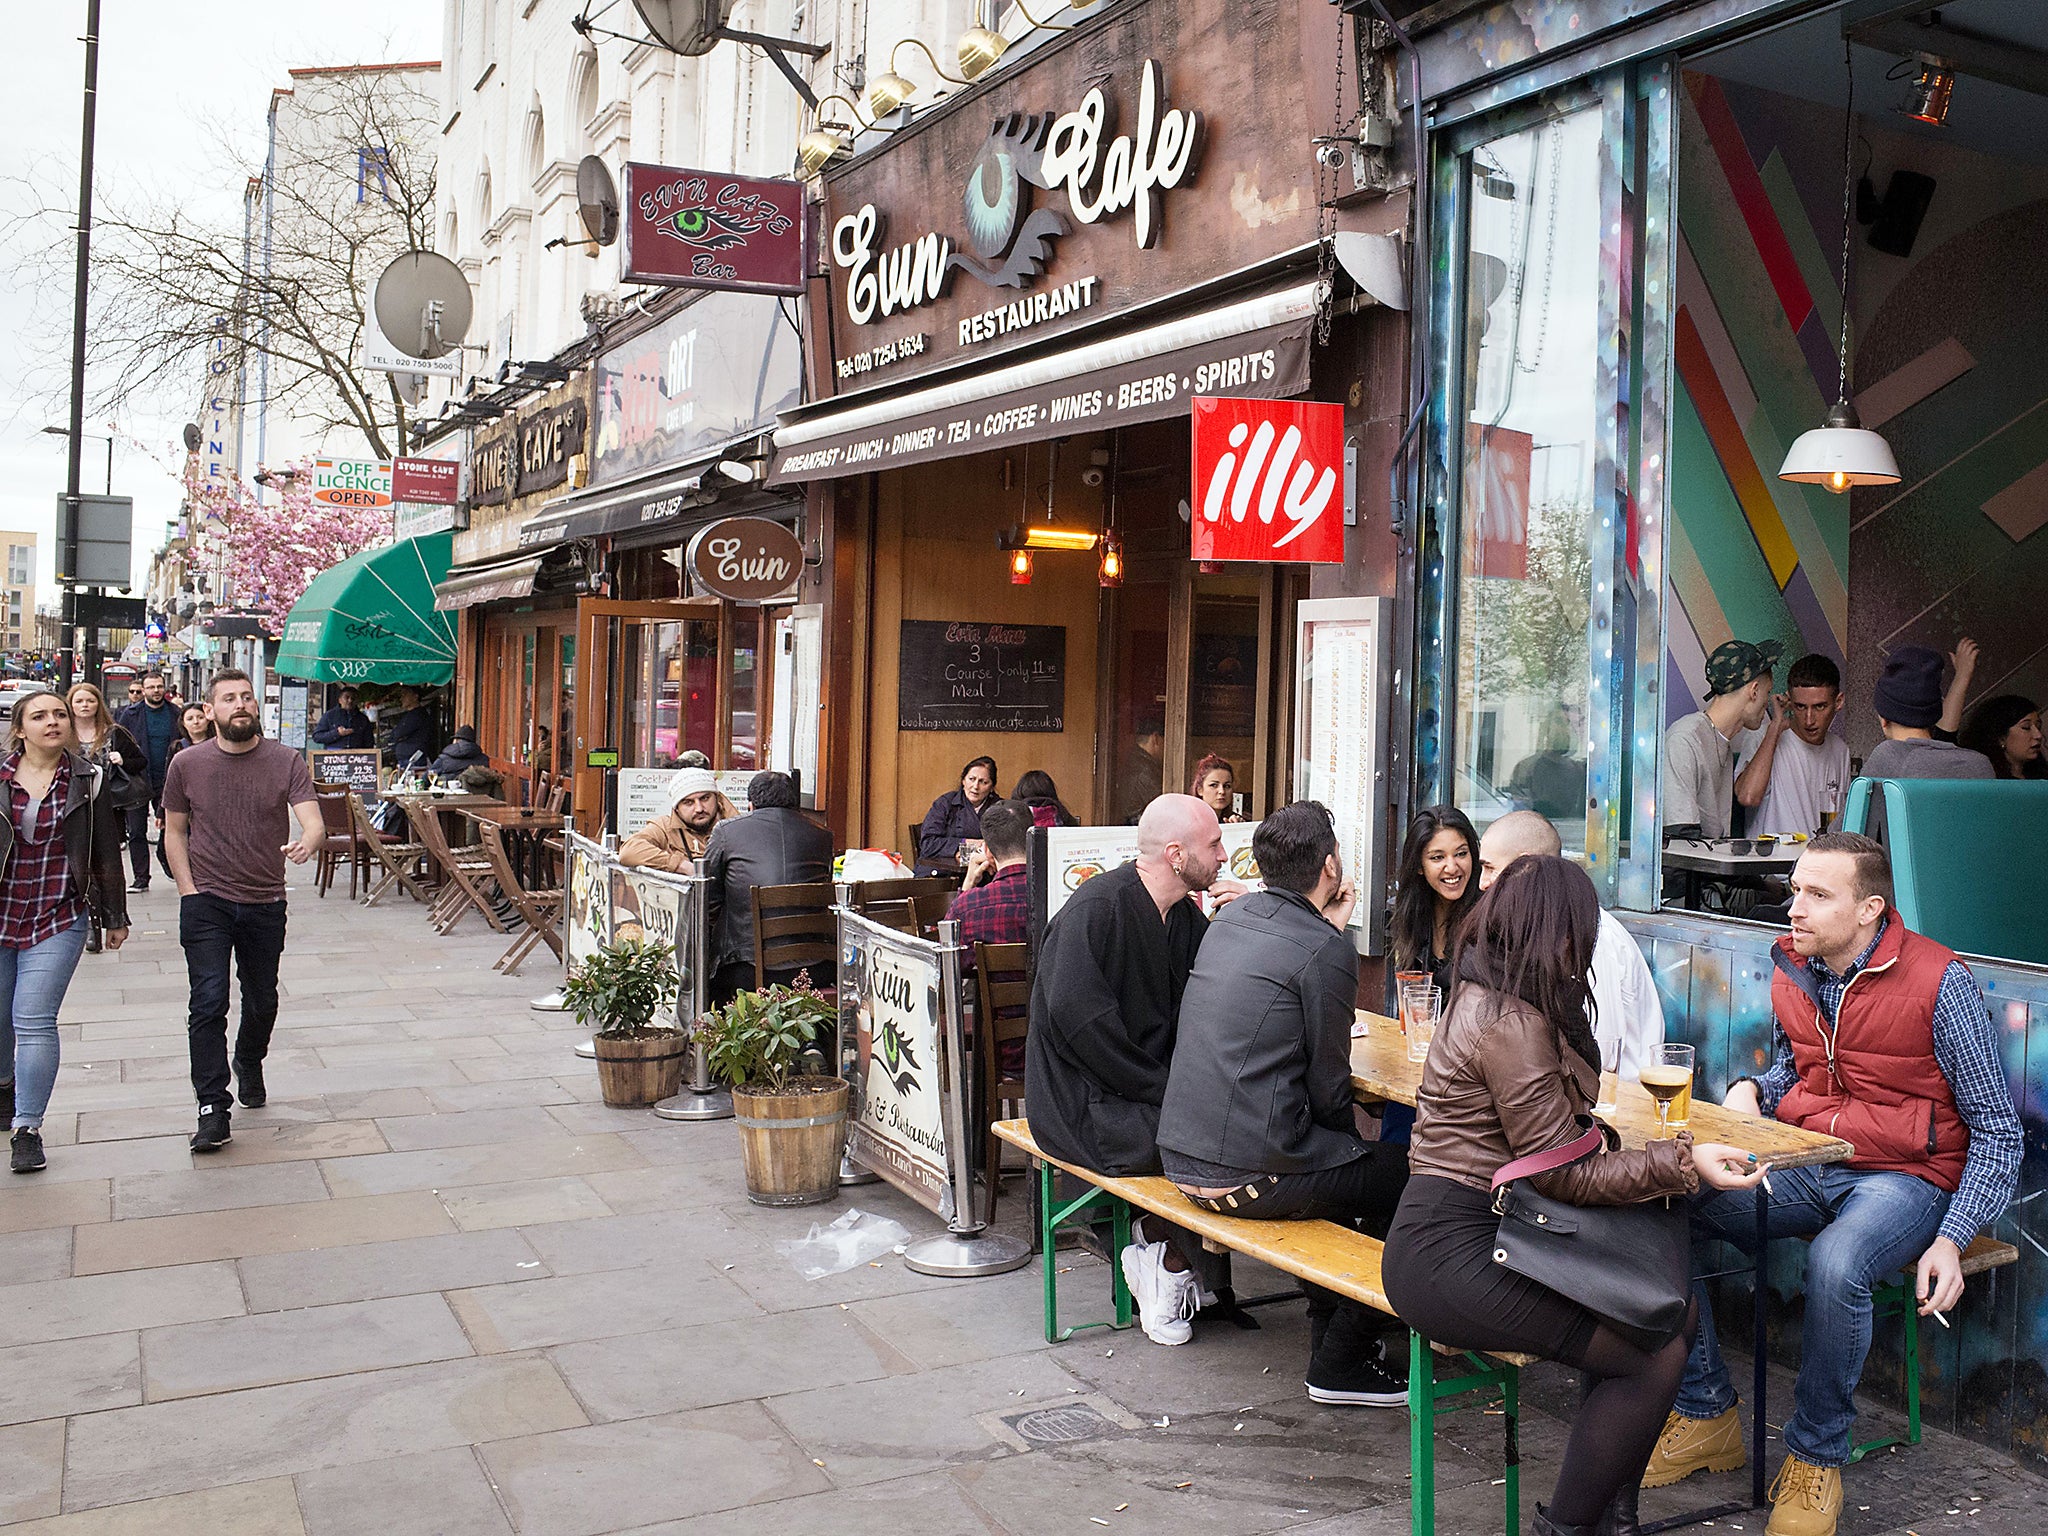 East London, the token hub of London's millenial culture